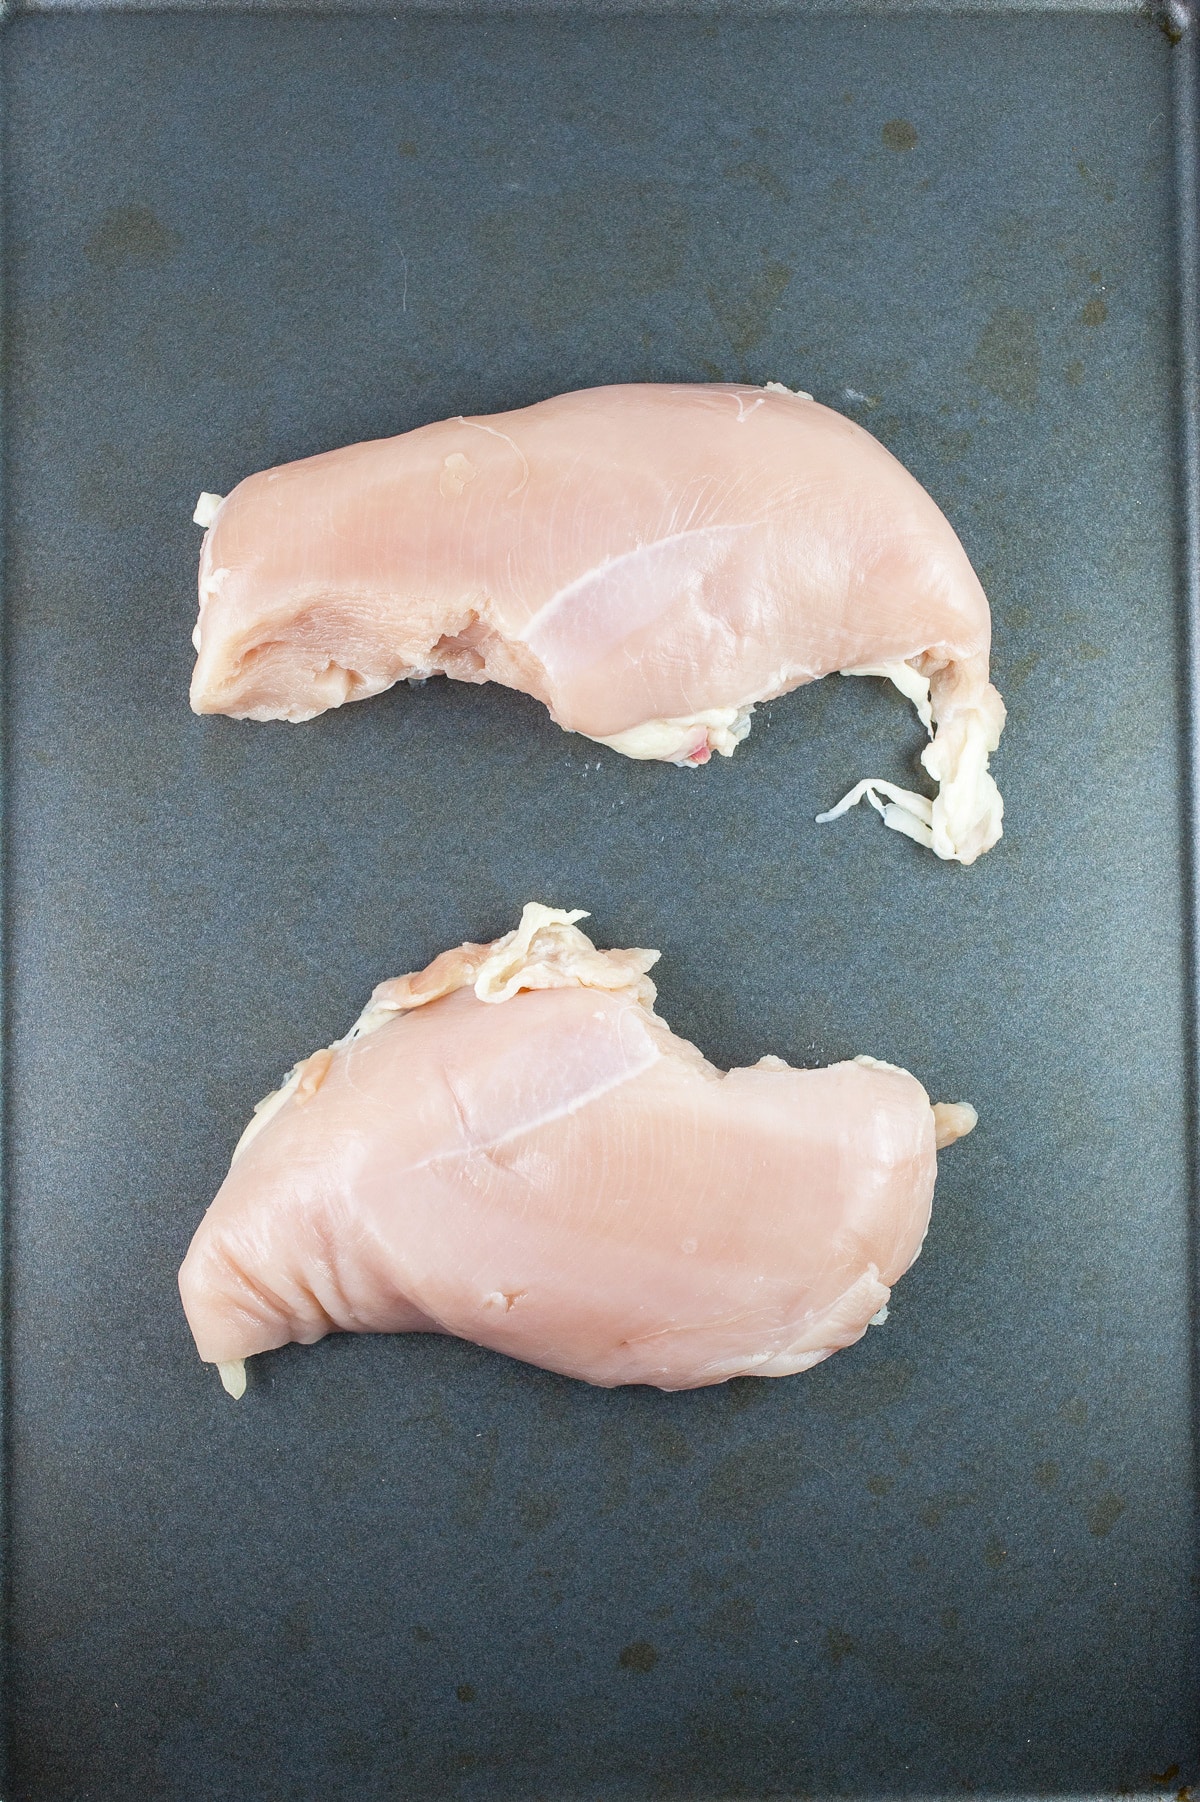 Raw chicken breasts on baking sheet.